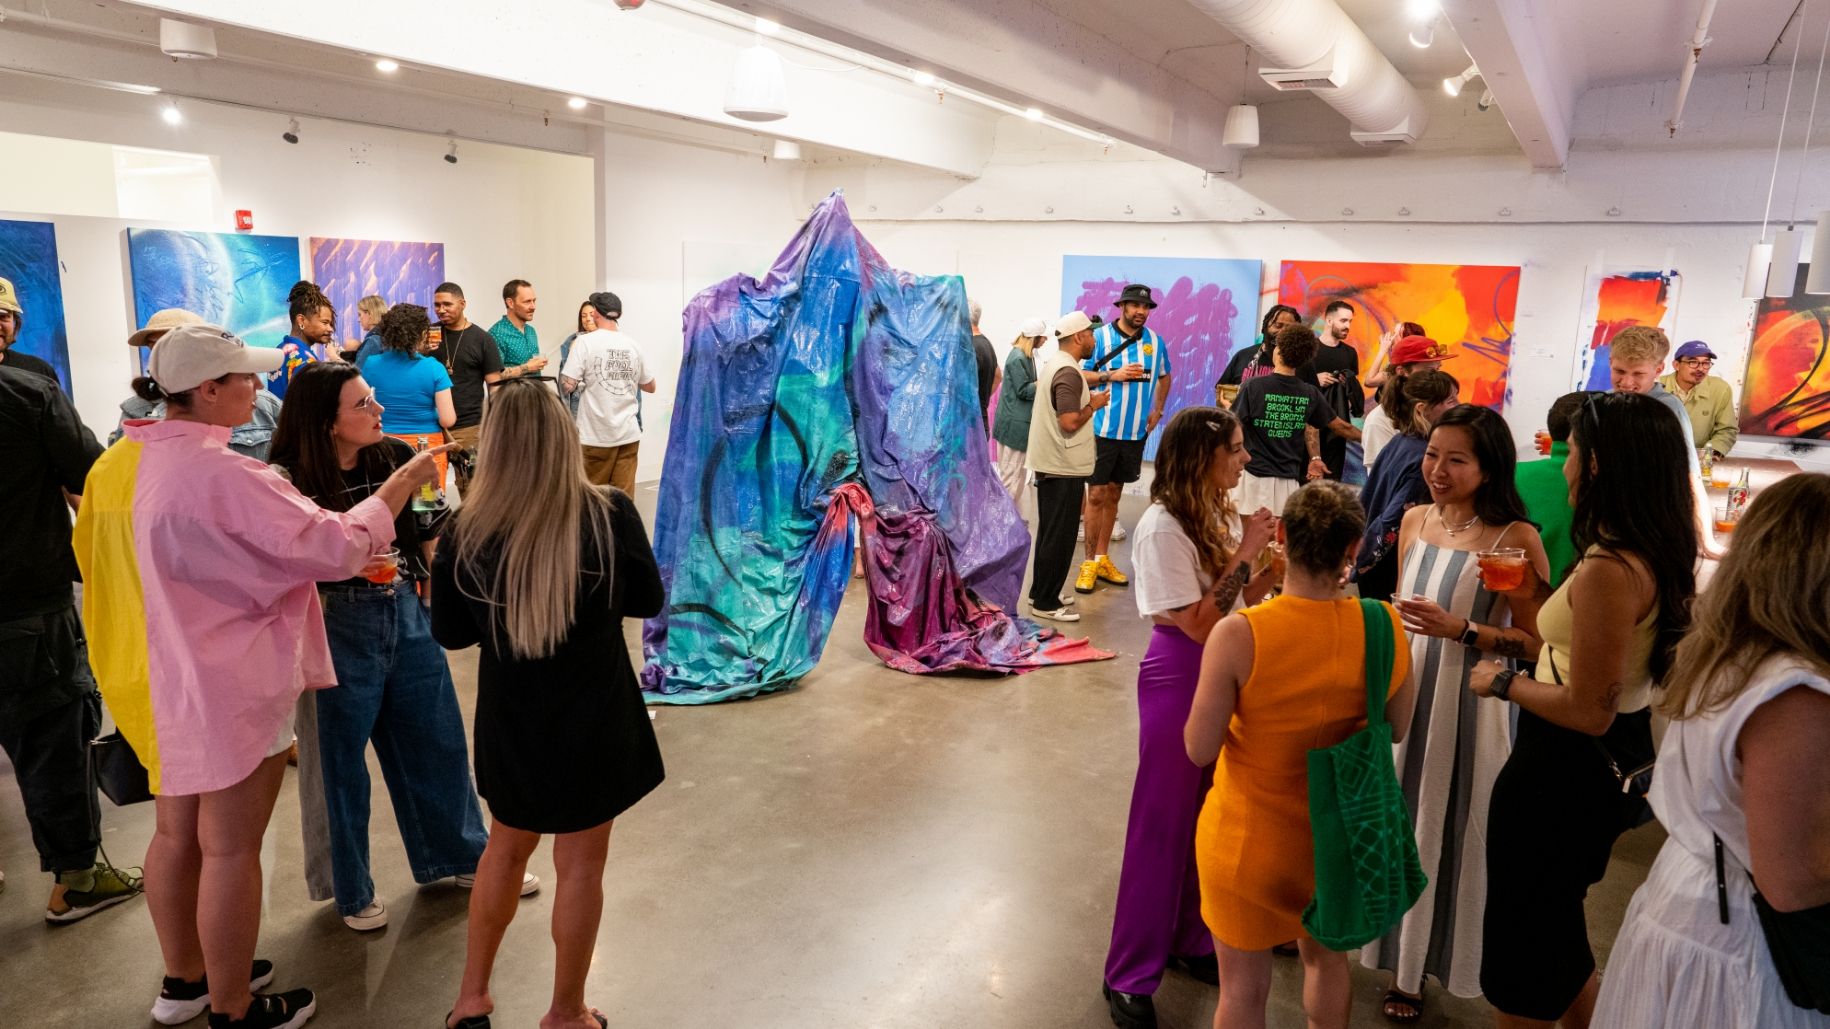 Dozens of people in exhibition opening around painted tarp sculpture